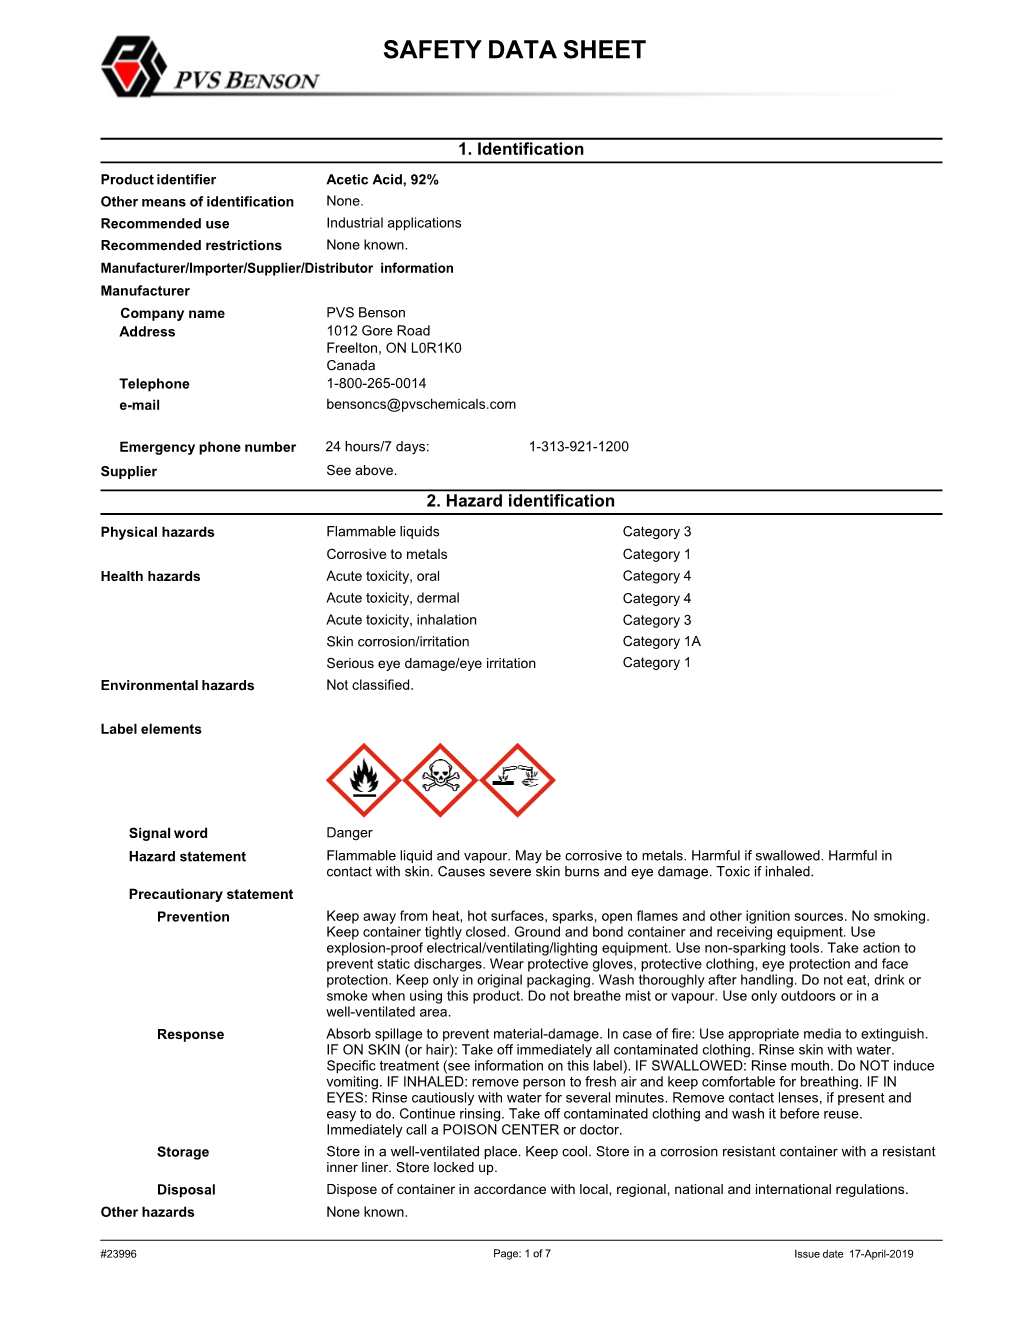 Safety Data Sheets (English – PDF File)